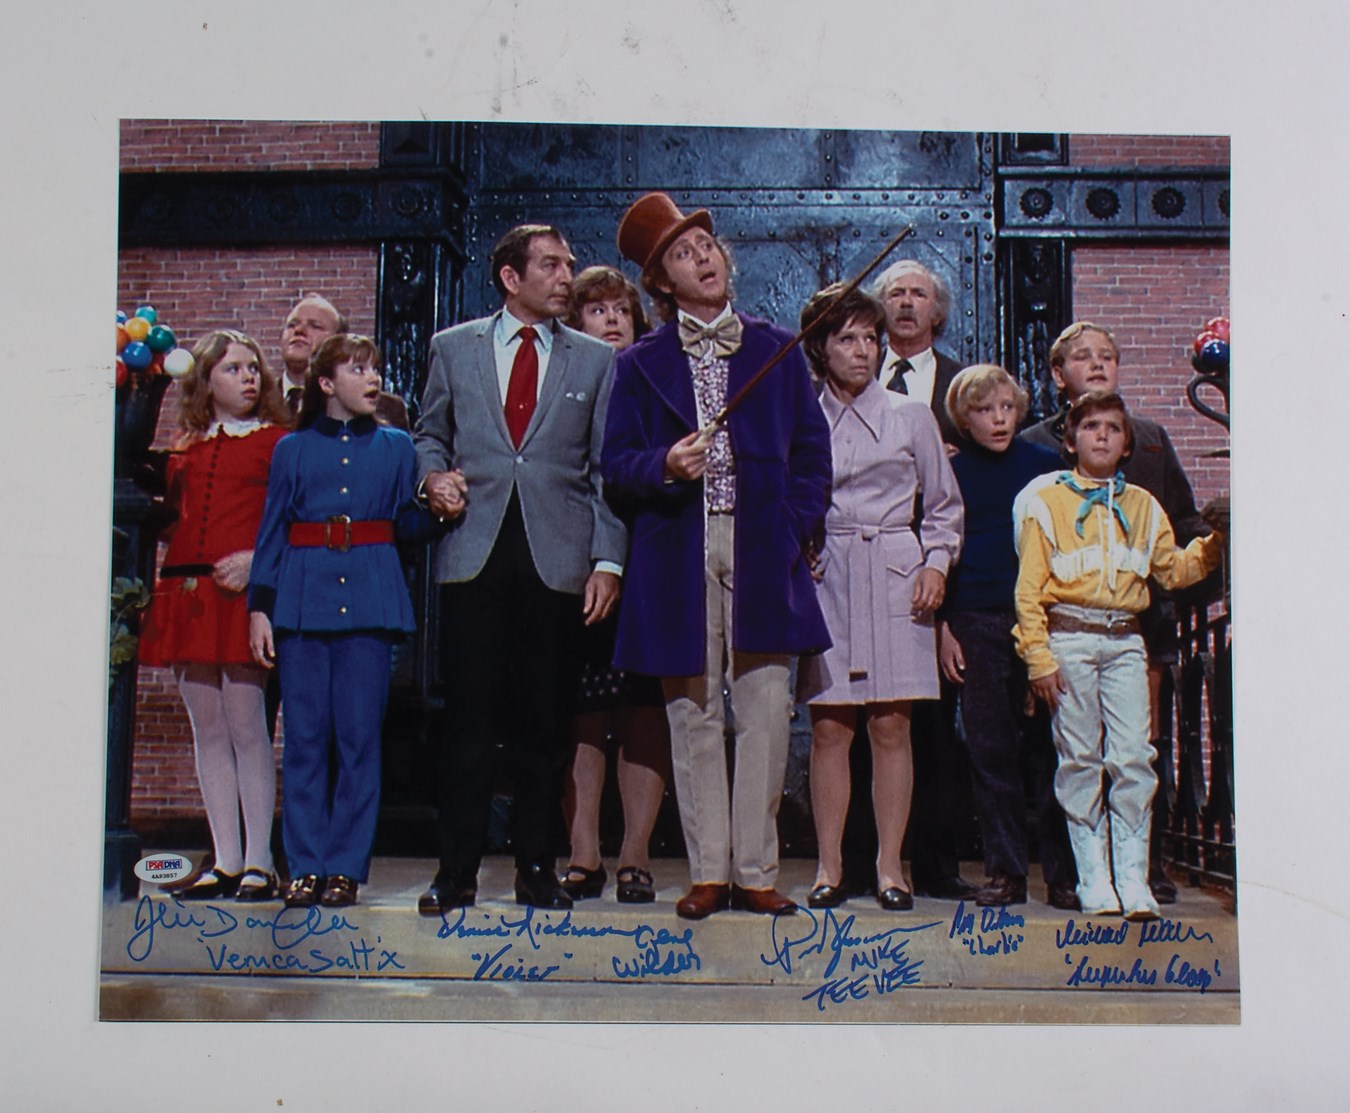 - Willie Wonka 16x20" Cast-Signed Photograph with Gene Wilder - PSA/DNA